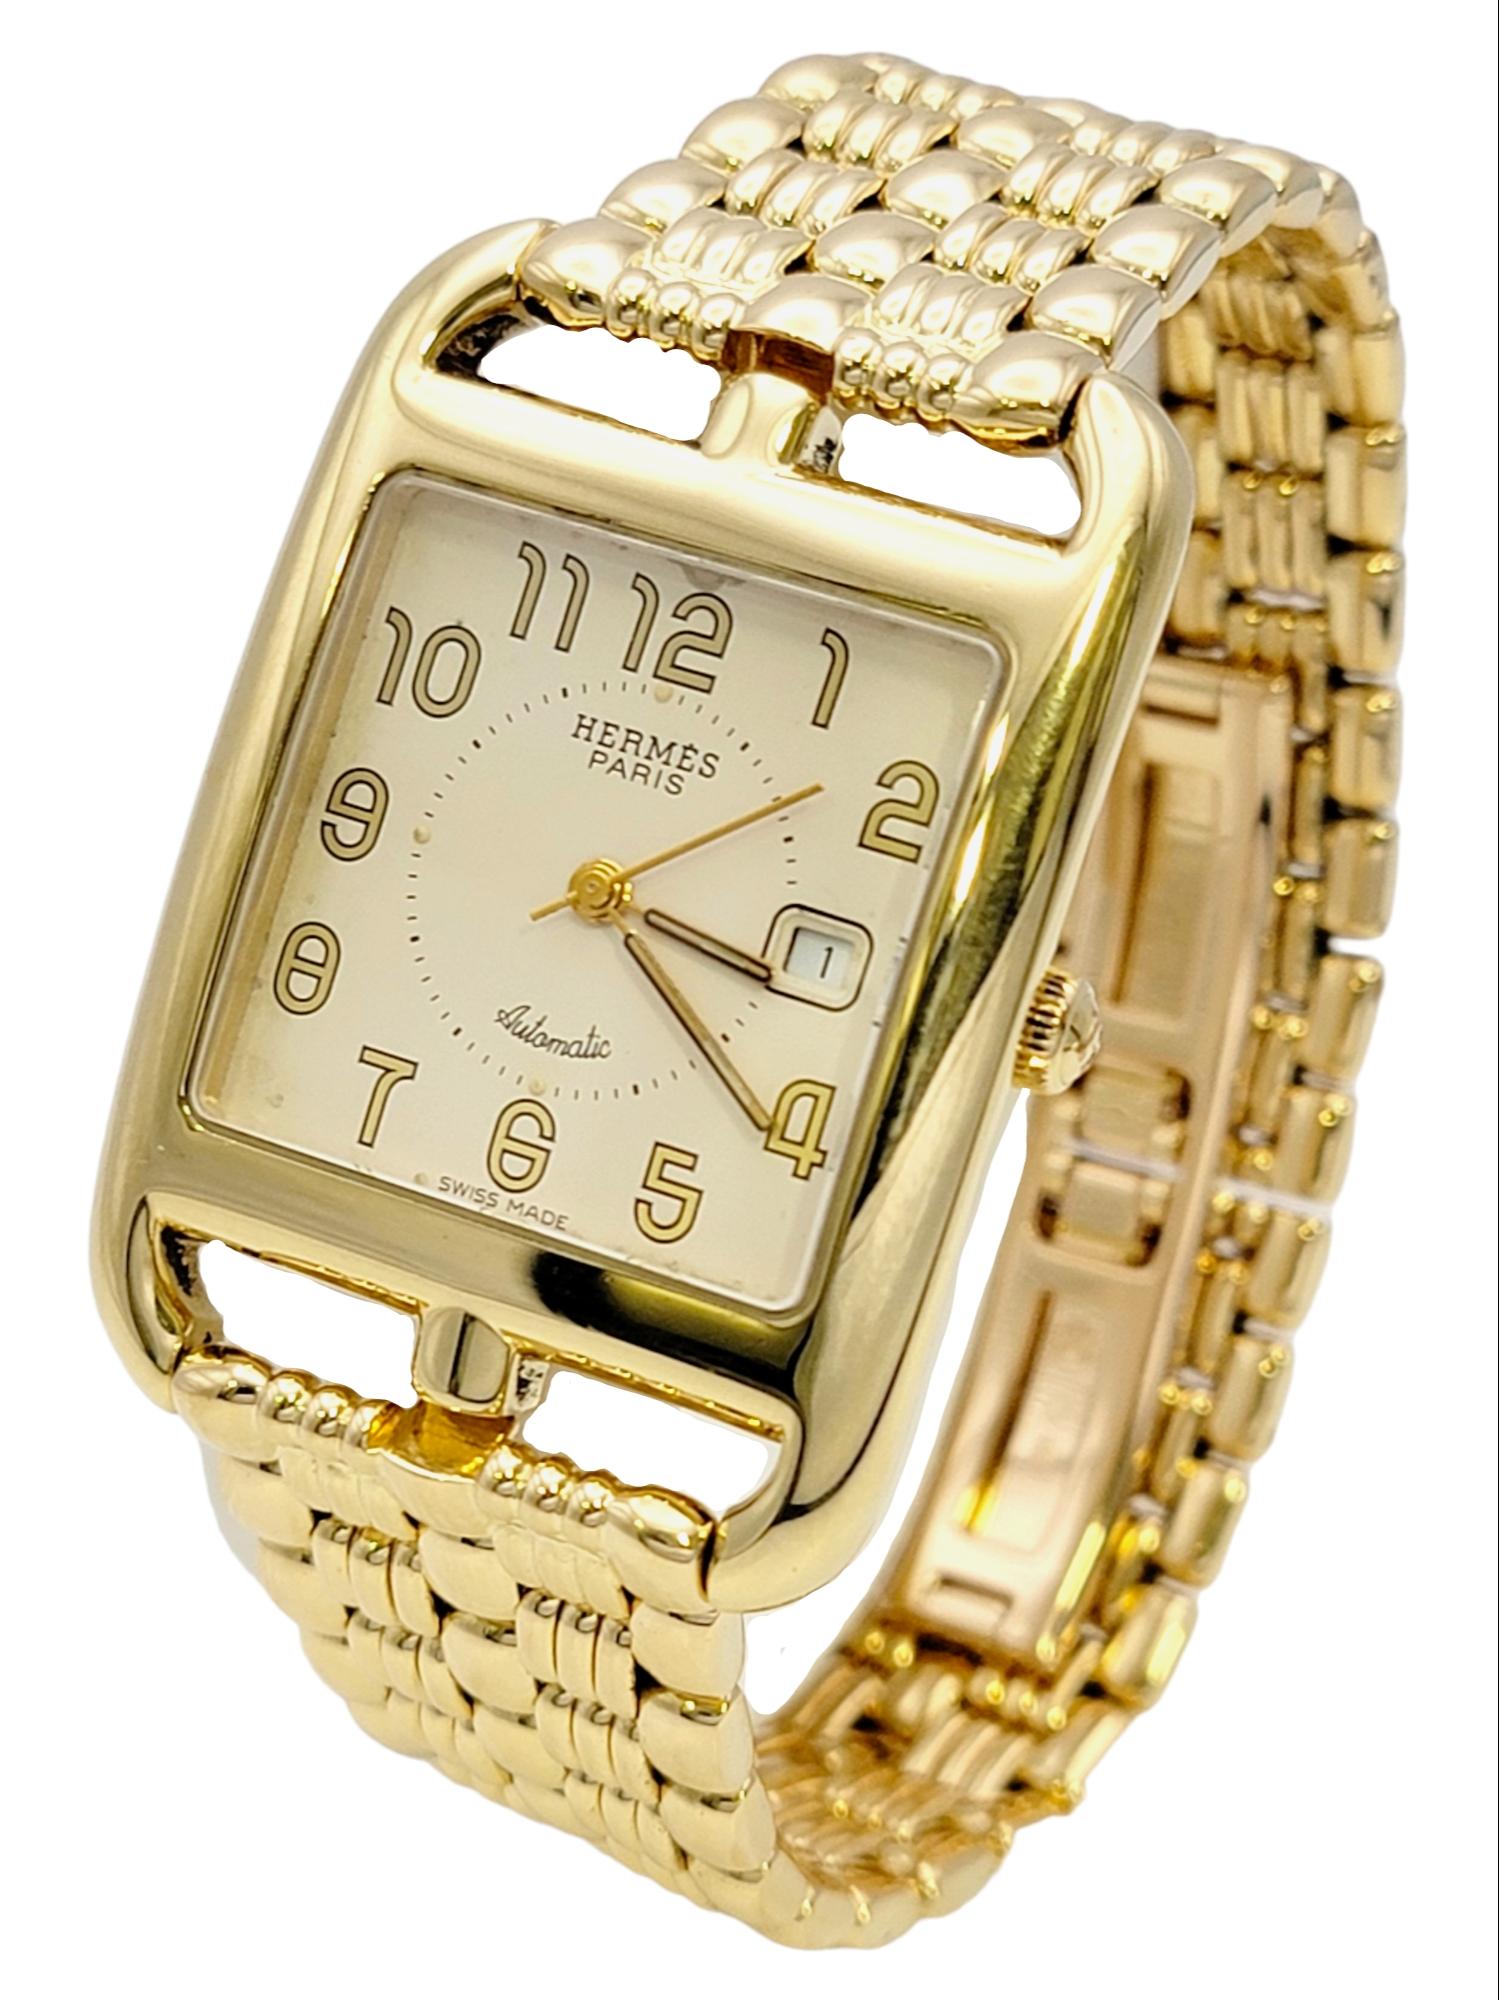 zitura gold watch price